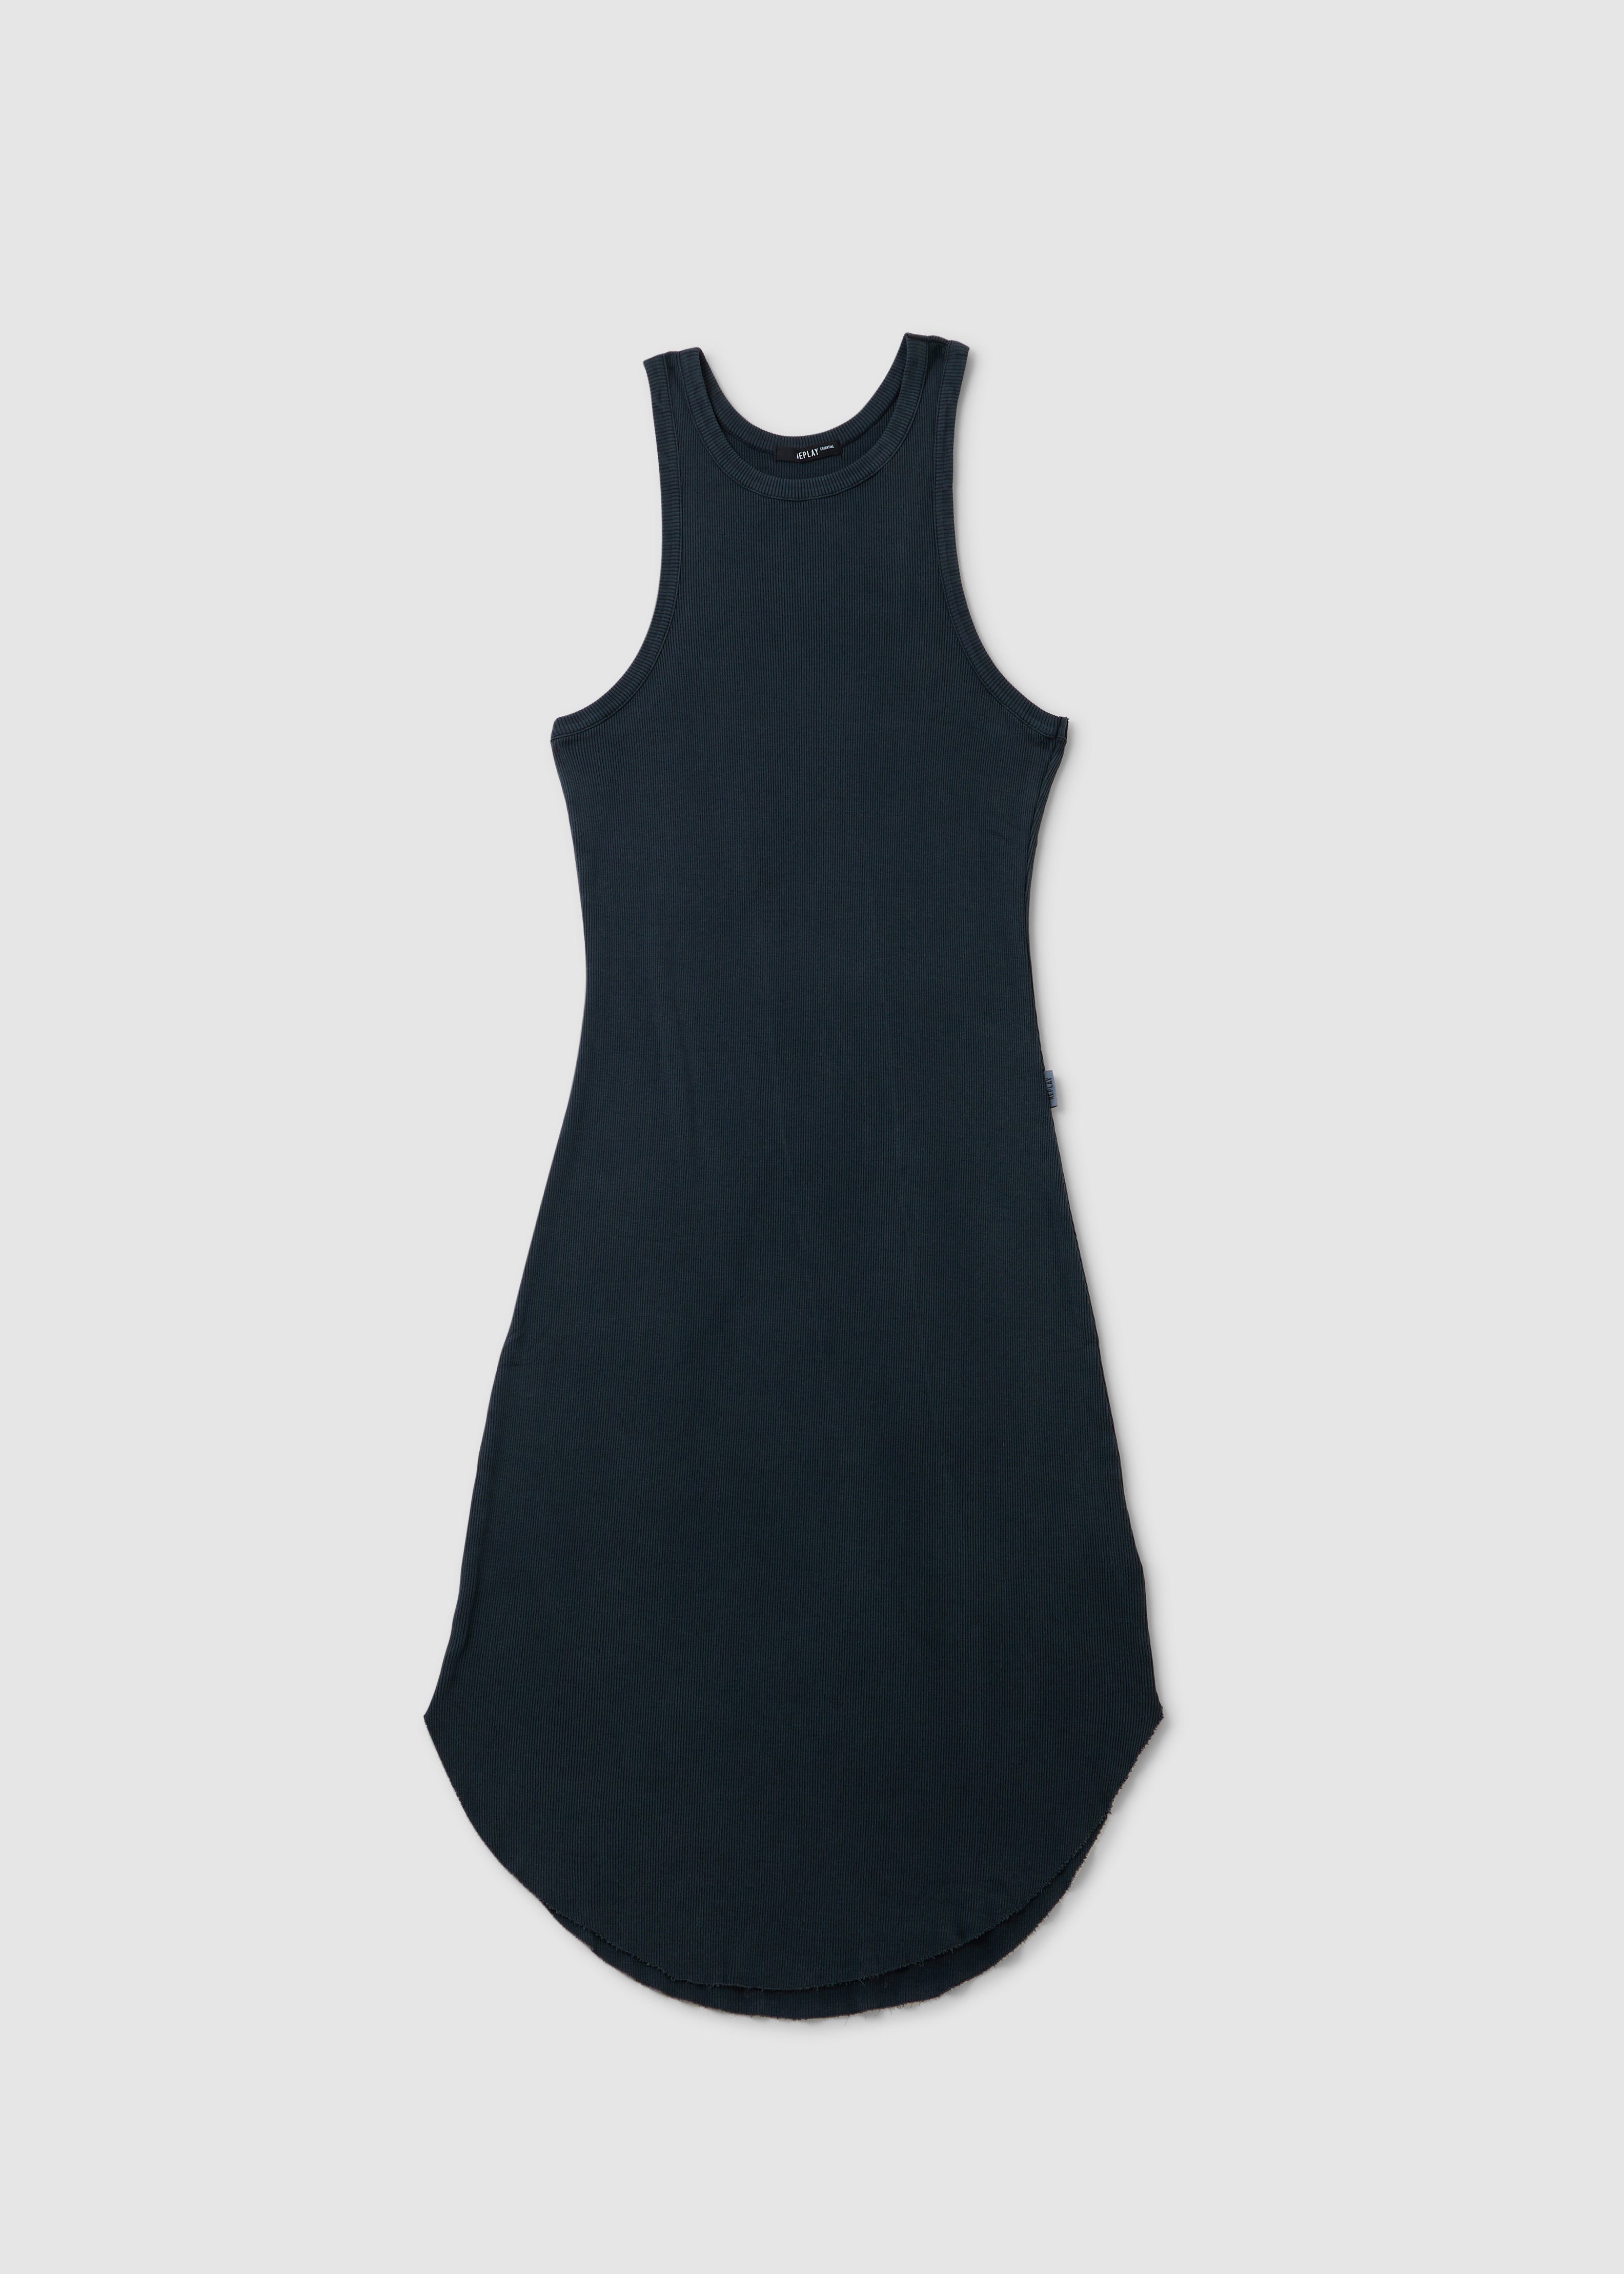 Image of Replay Womens Essential Tank Top Dress In Black